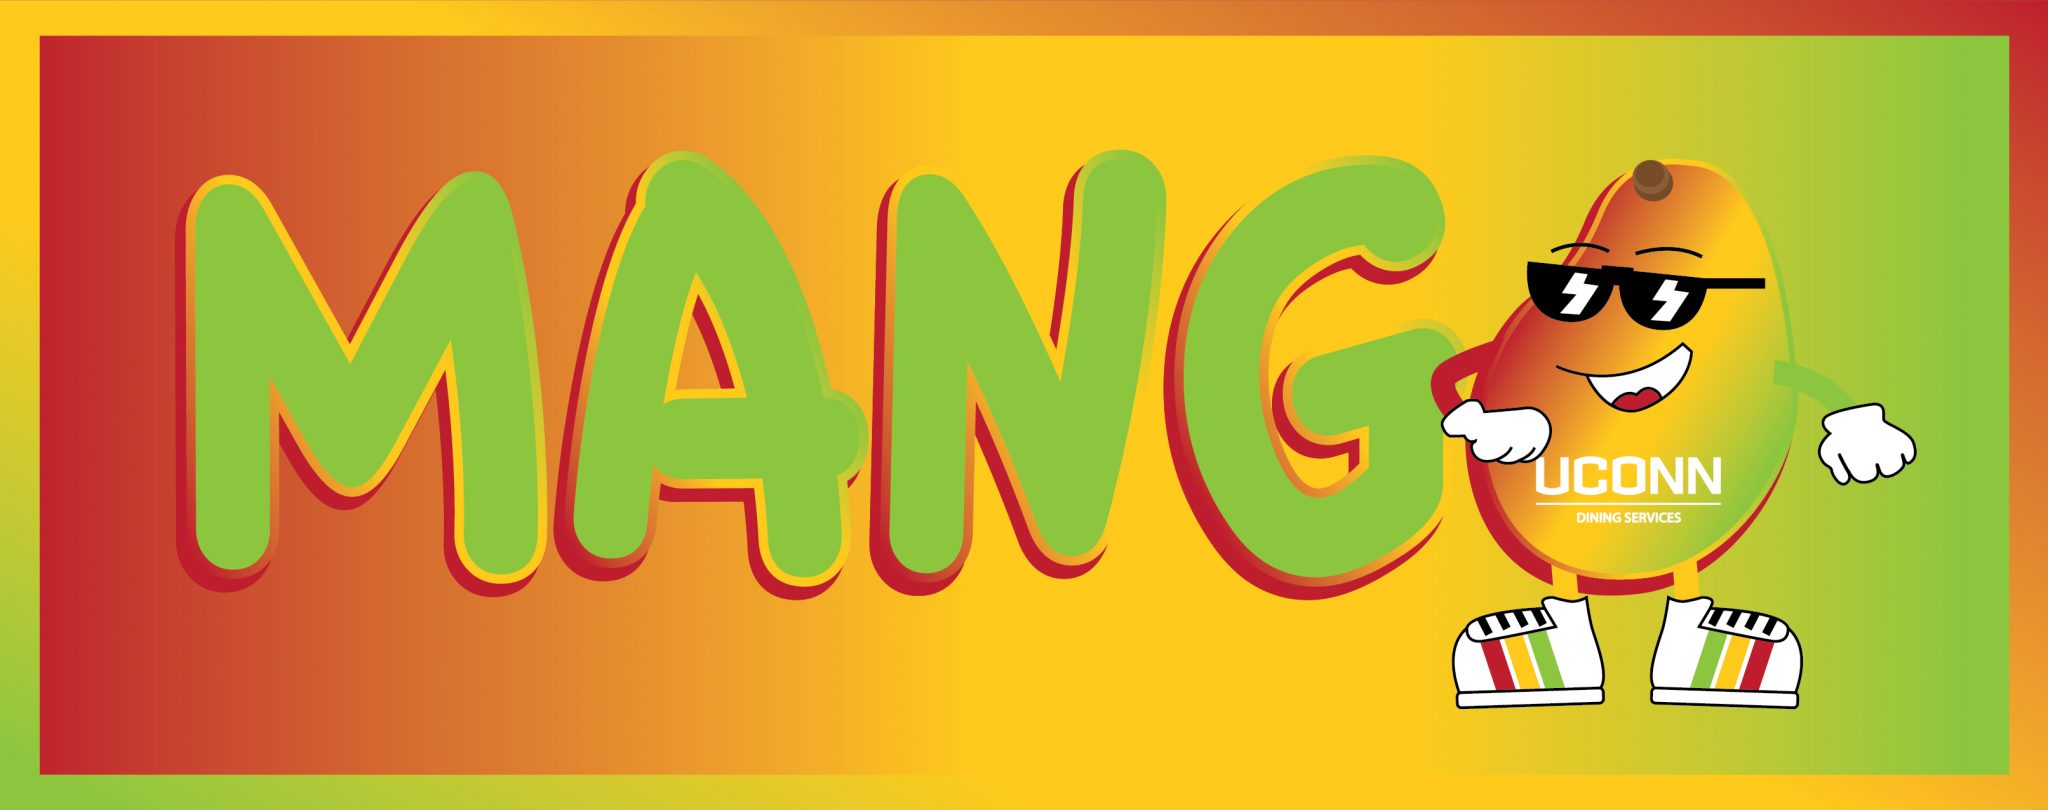 dining services mango logo mango wearing sunglasses